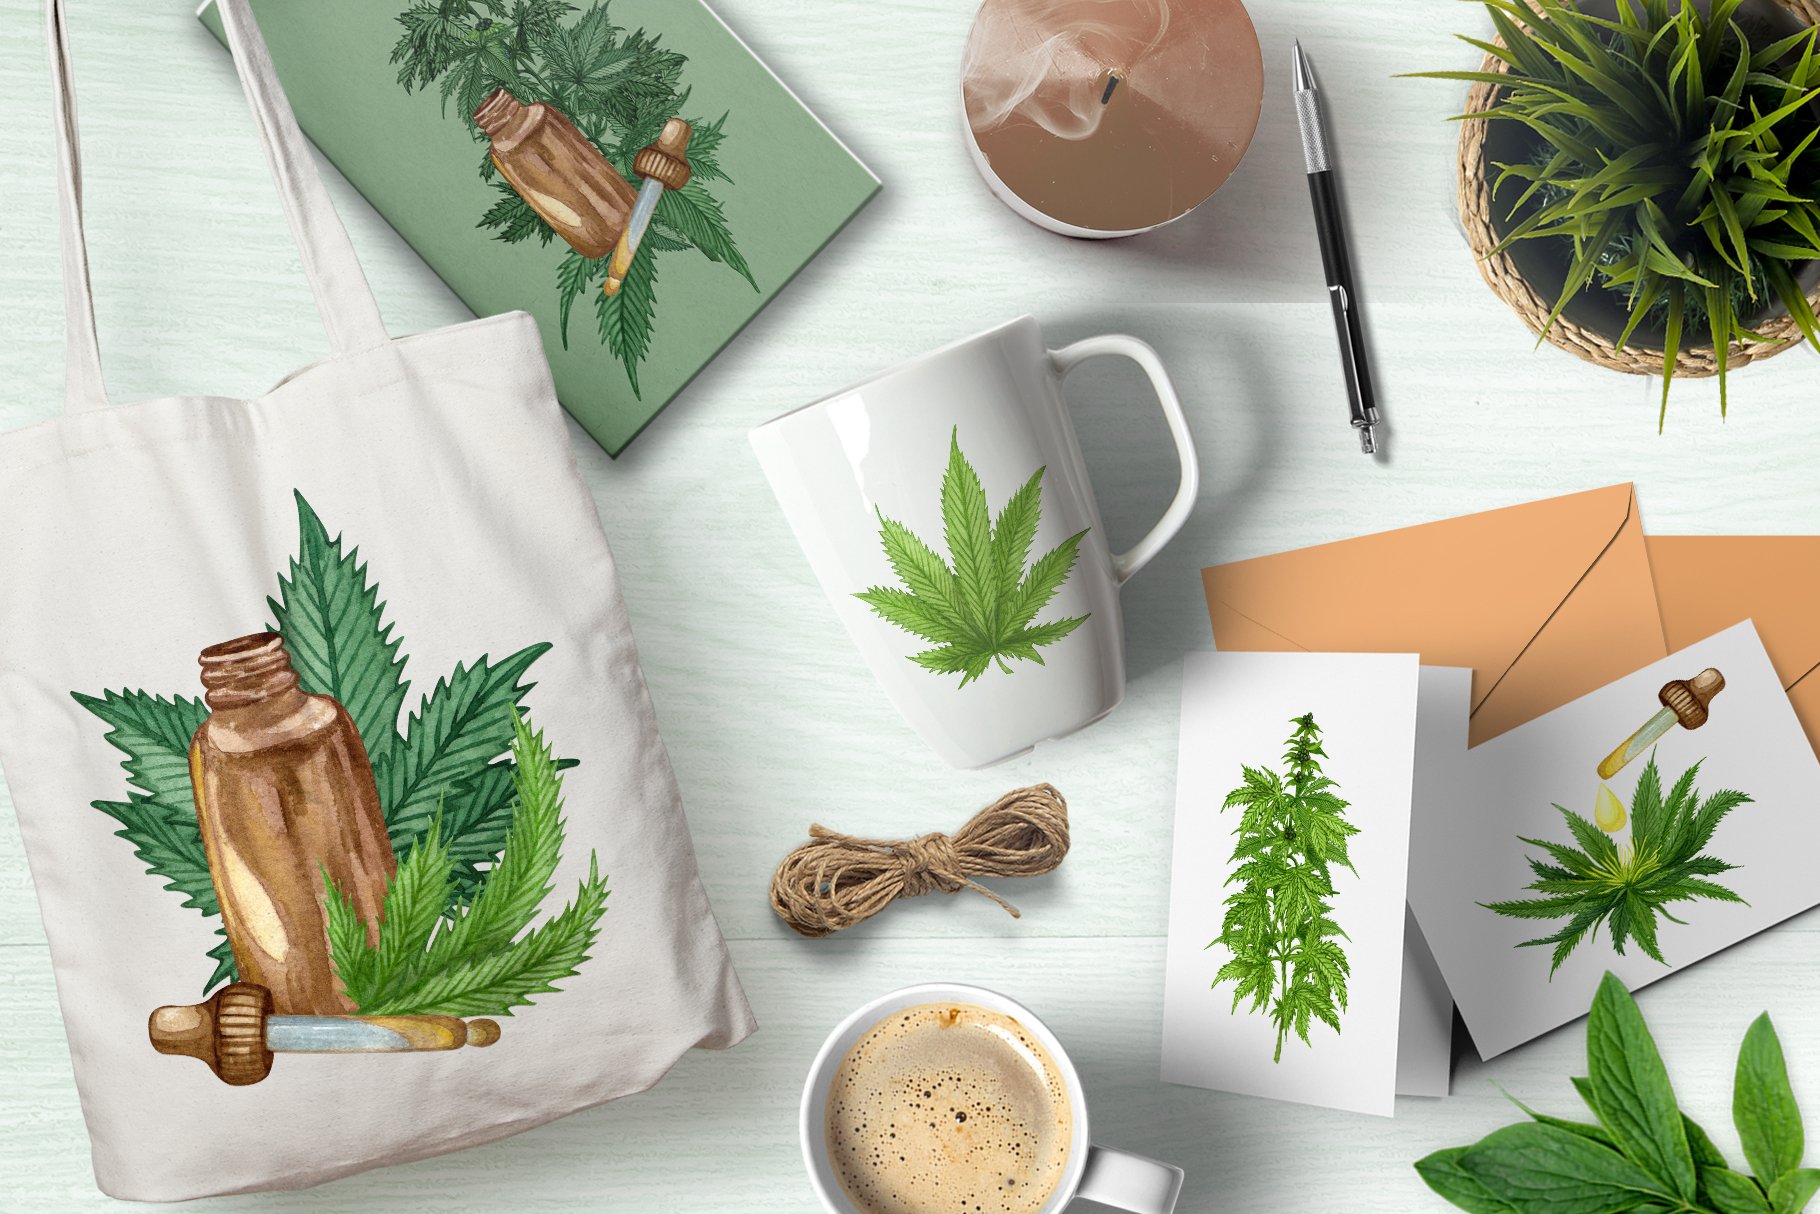 Design Cannabis on a shopper, cup and card.